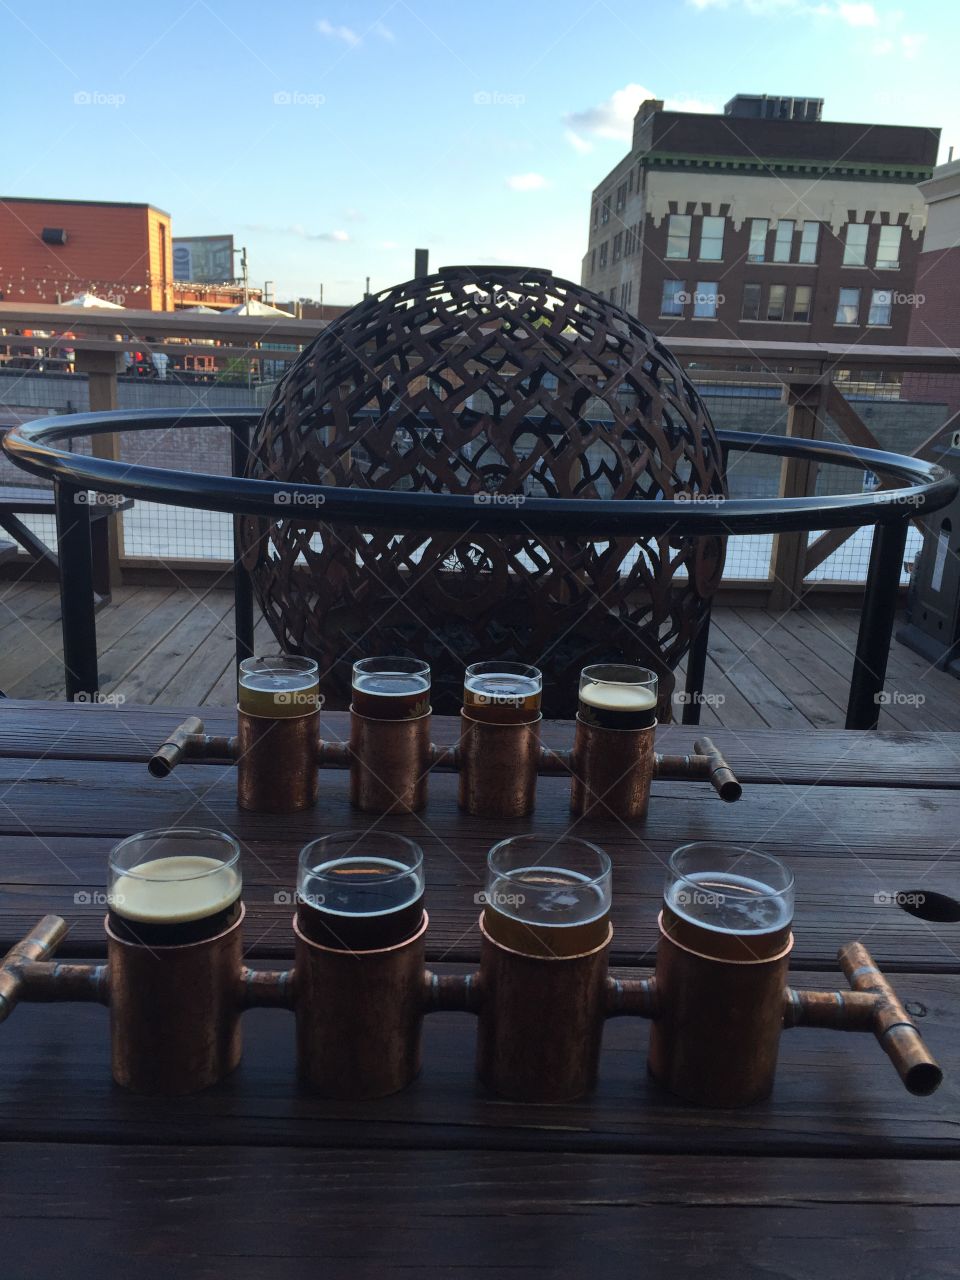 Flights of beer on city rooftop bar